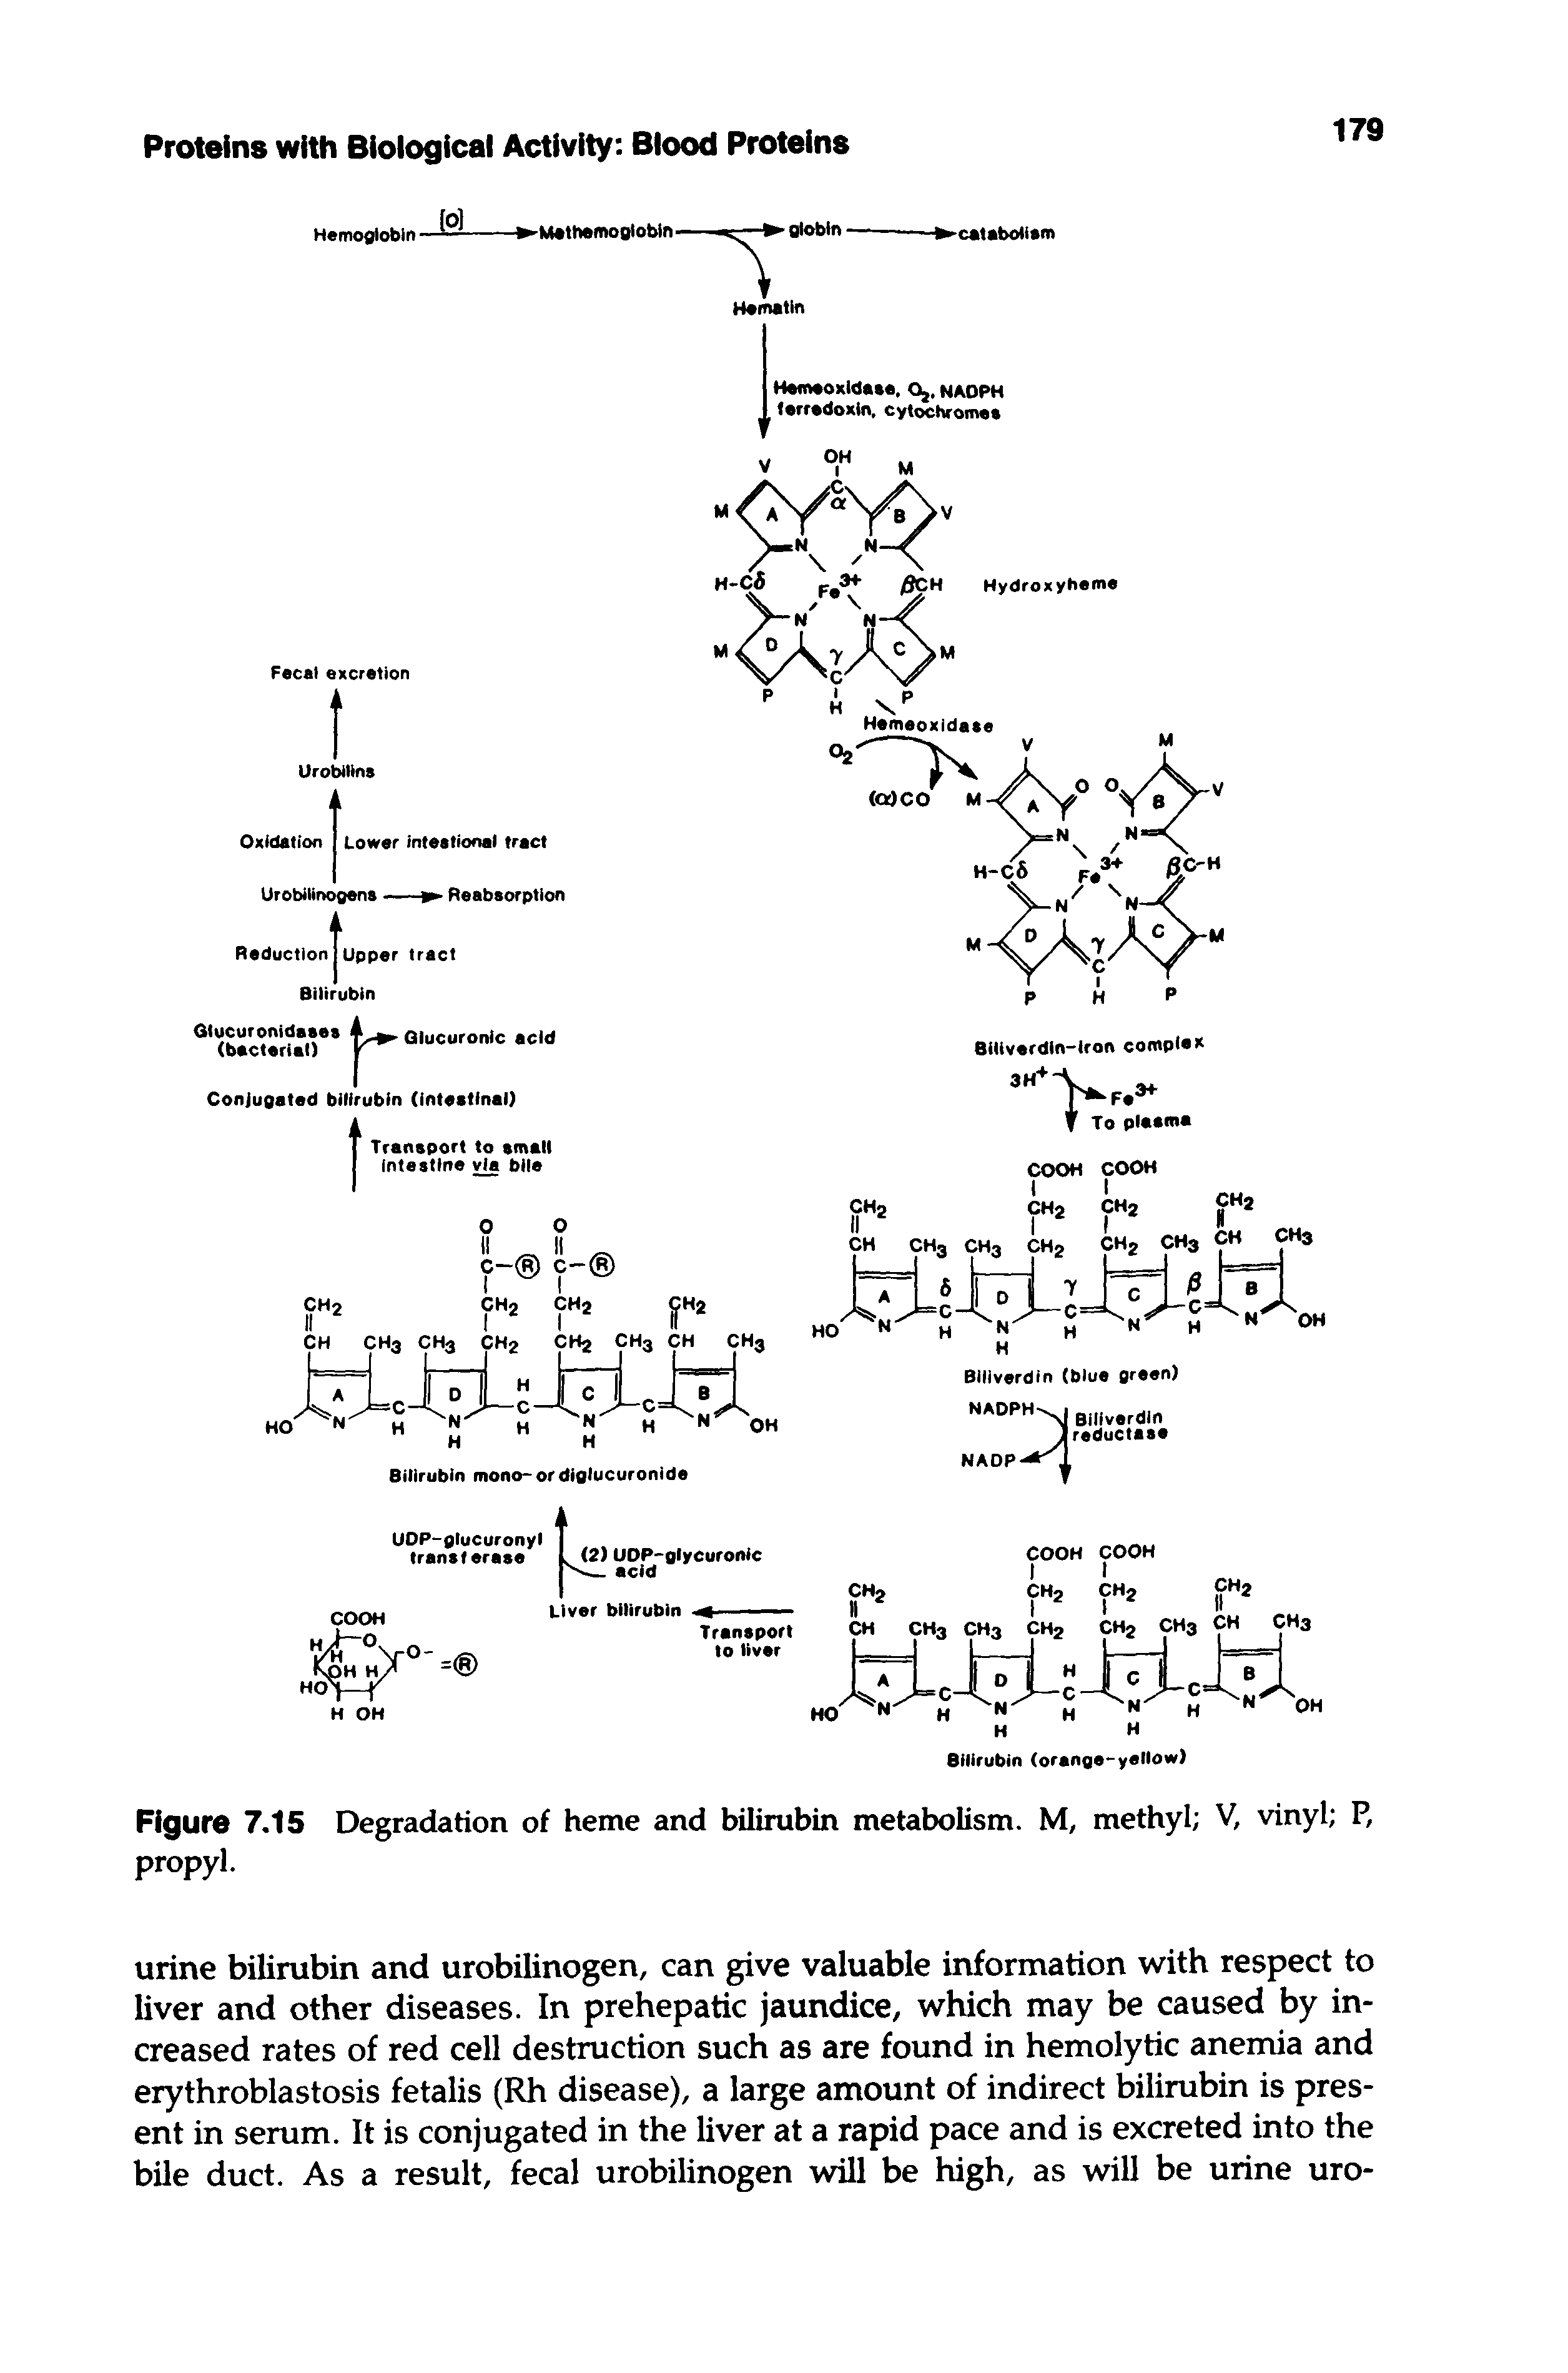 Figure 7.15 Degradation of heme and bilirubin metabolism. M, methyl V, vinyl P, propyl.